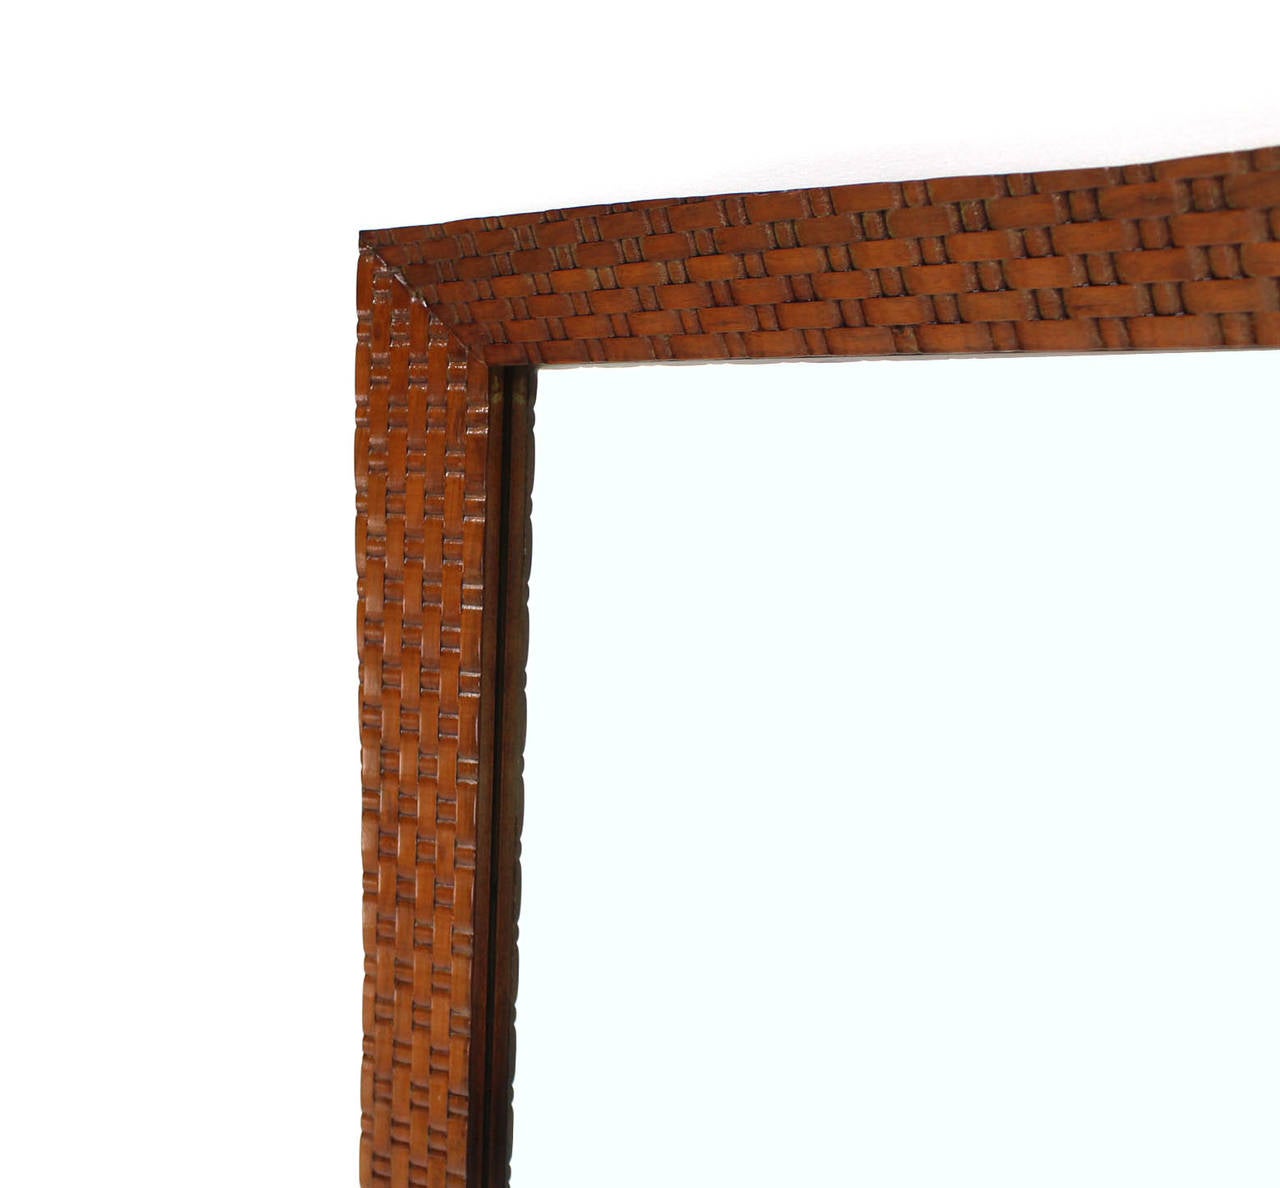 Very nice mid-century modern carved lattice wood pattern frame mirror.